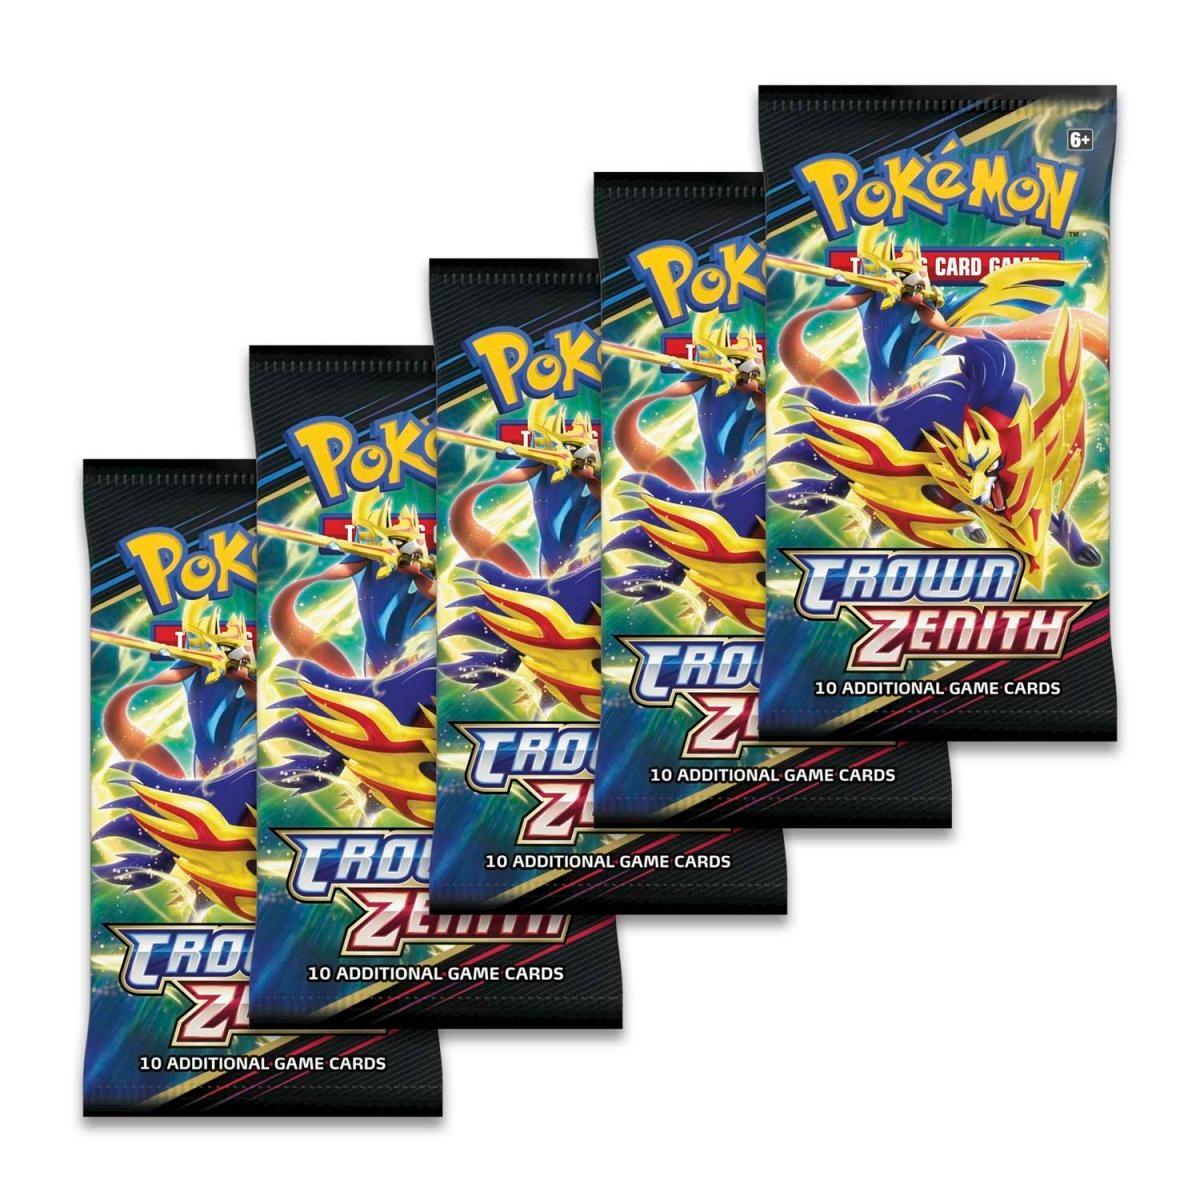 Pokemon Box - Premium Playmat Collection - Crown Zenith - Morpeko V-UNION - Hobby Champion Inc